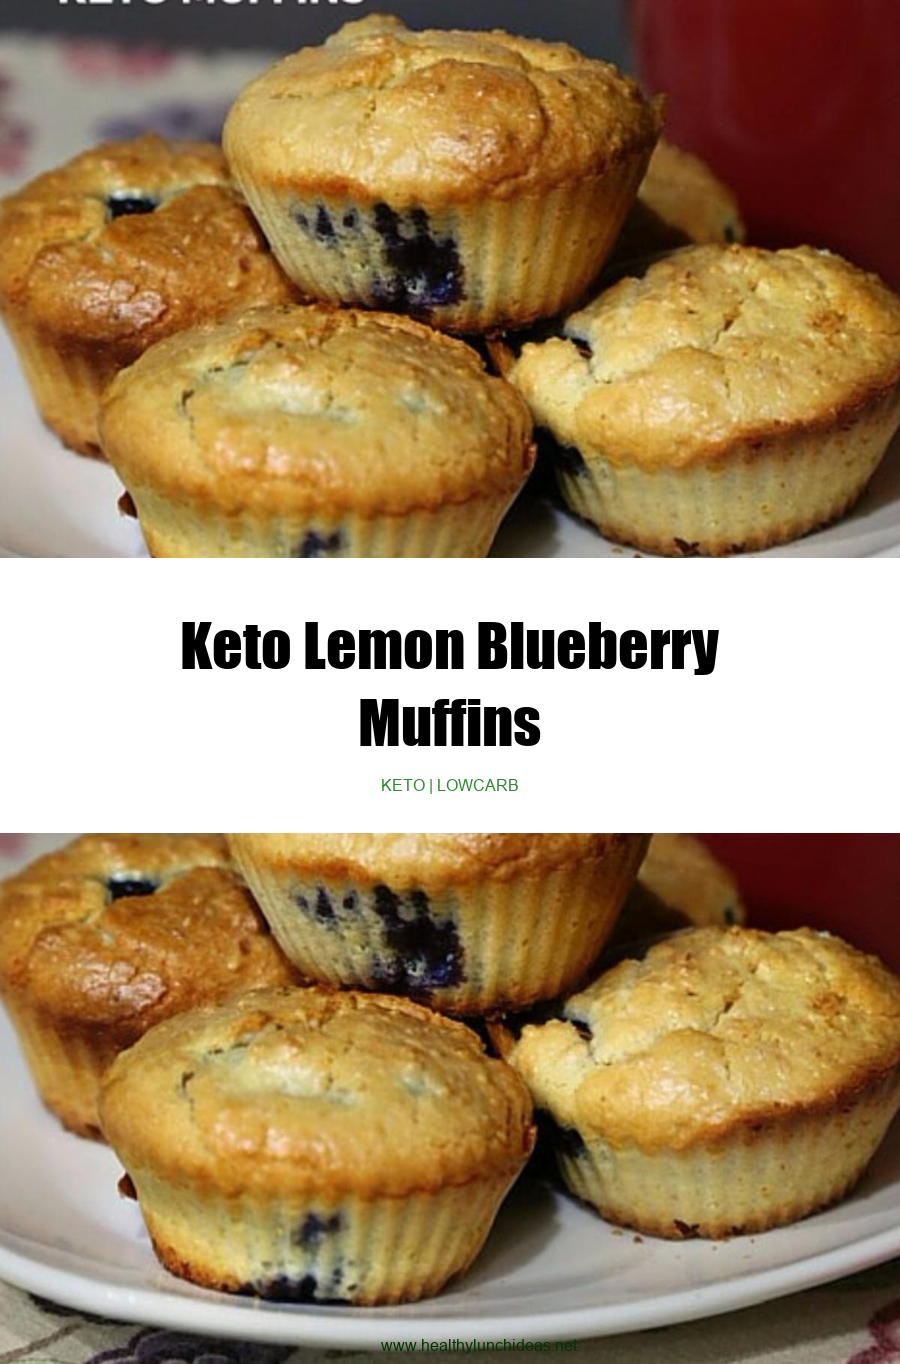 Healthy Recipes: Keto Lemon Blueberry Muffins Recipe